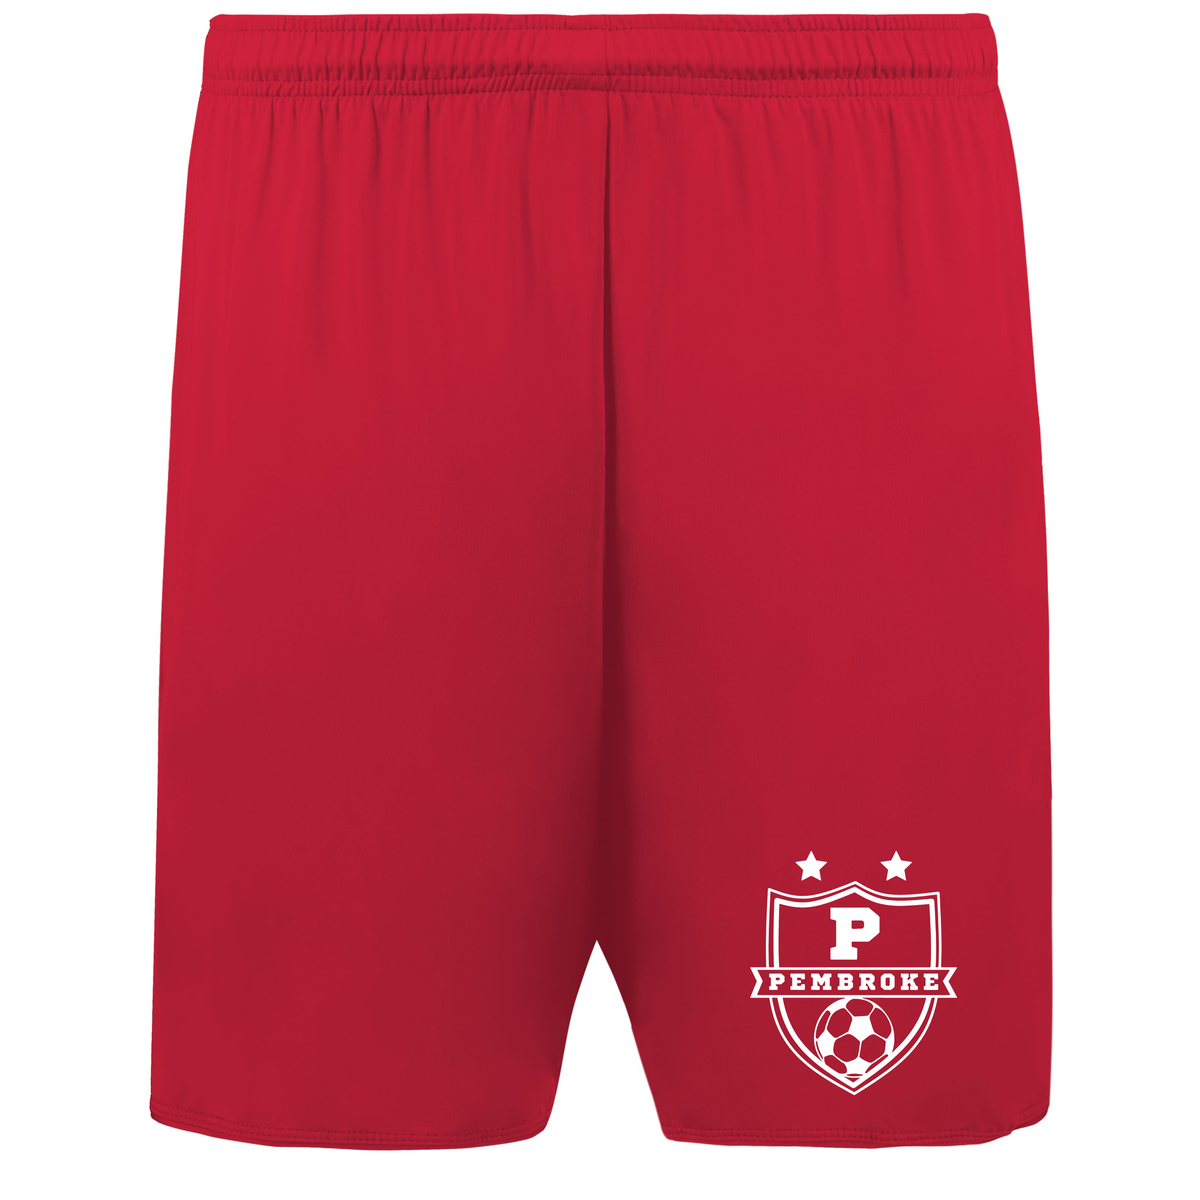 Pembroke Soccer Play90 Coolcore Soccer Shorts